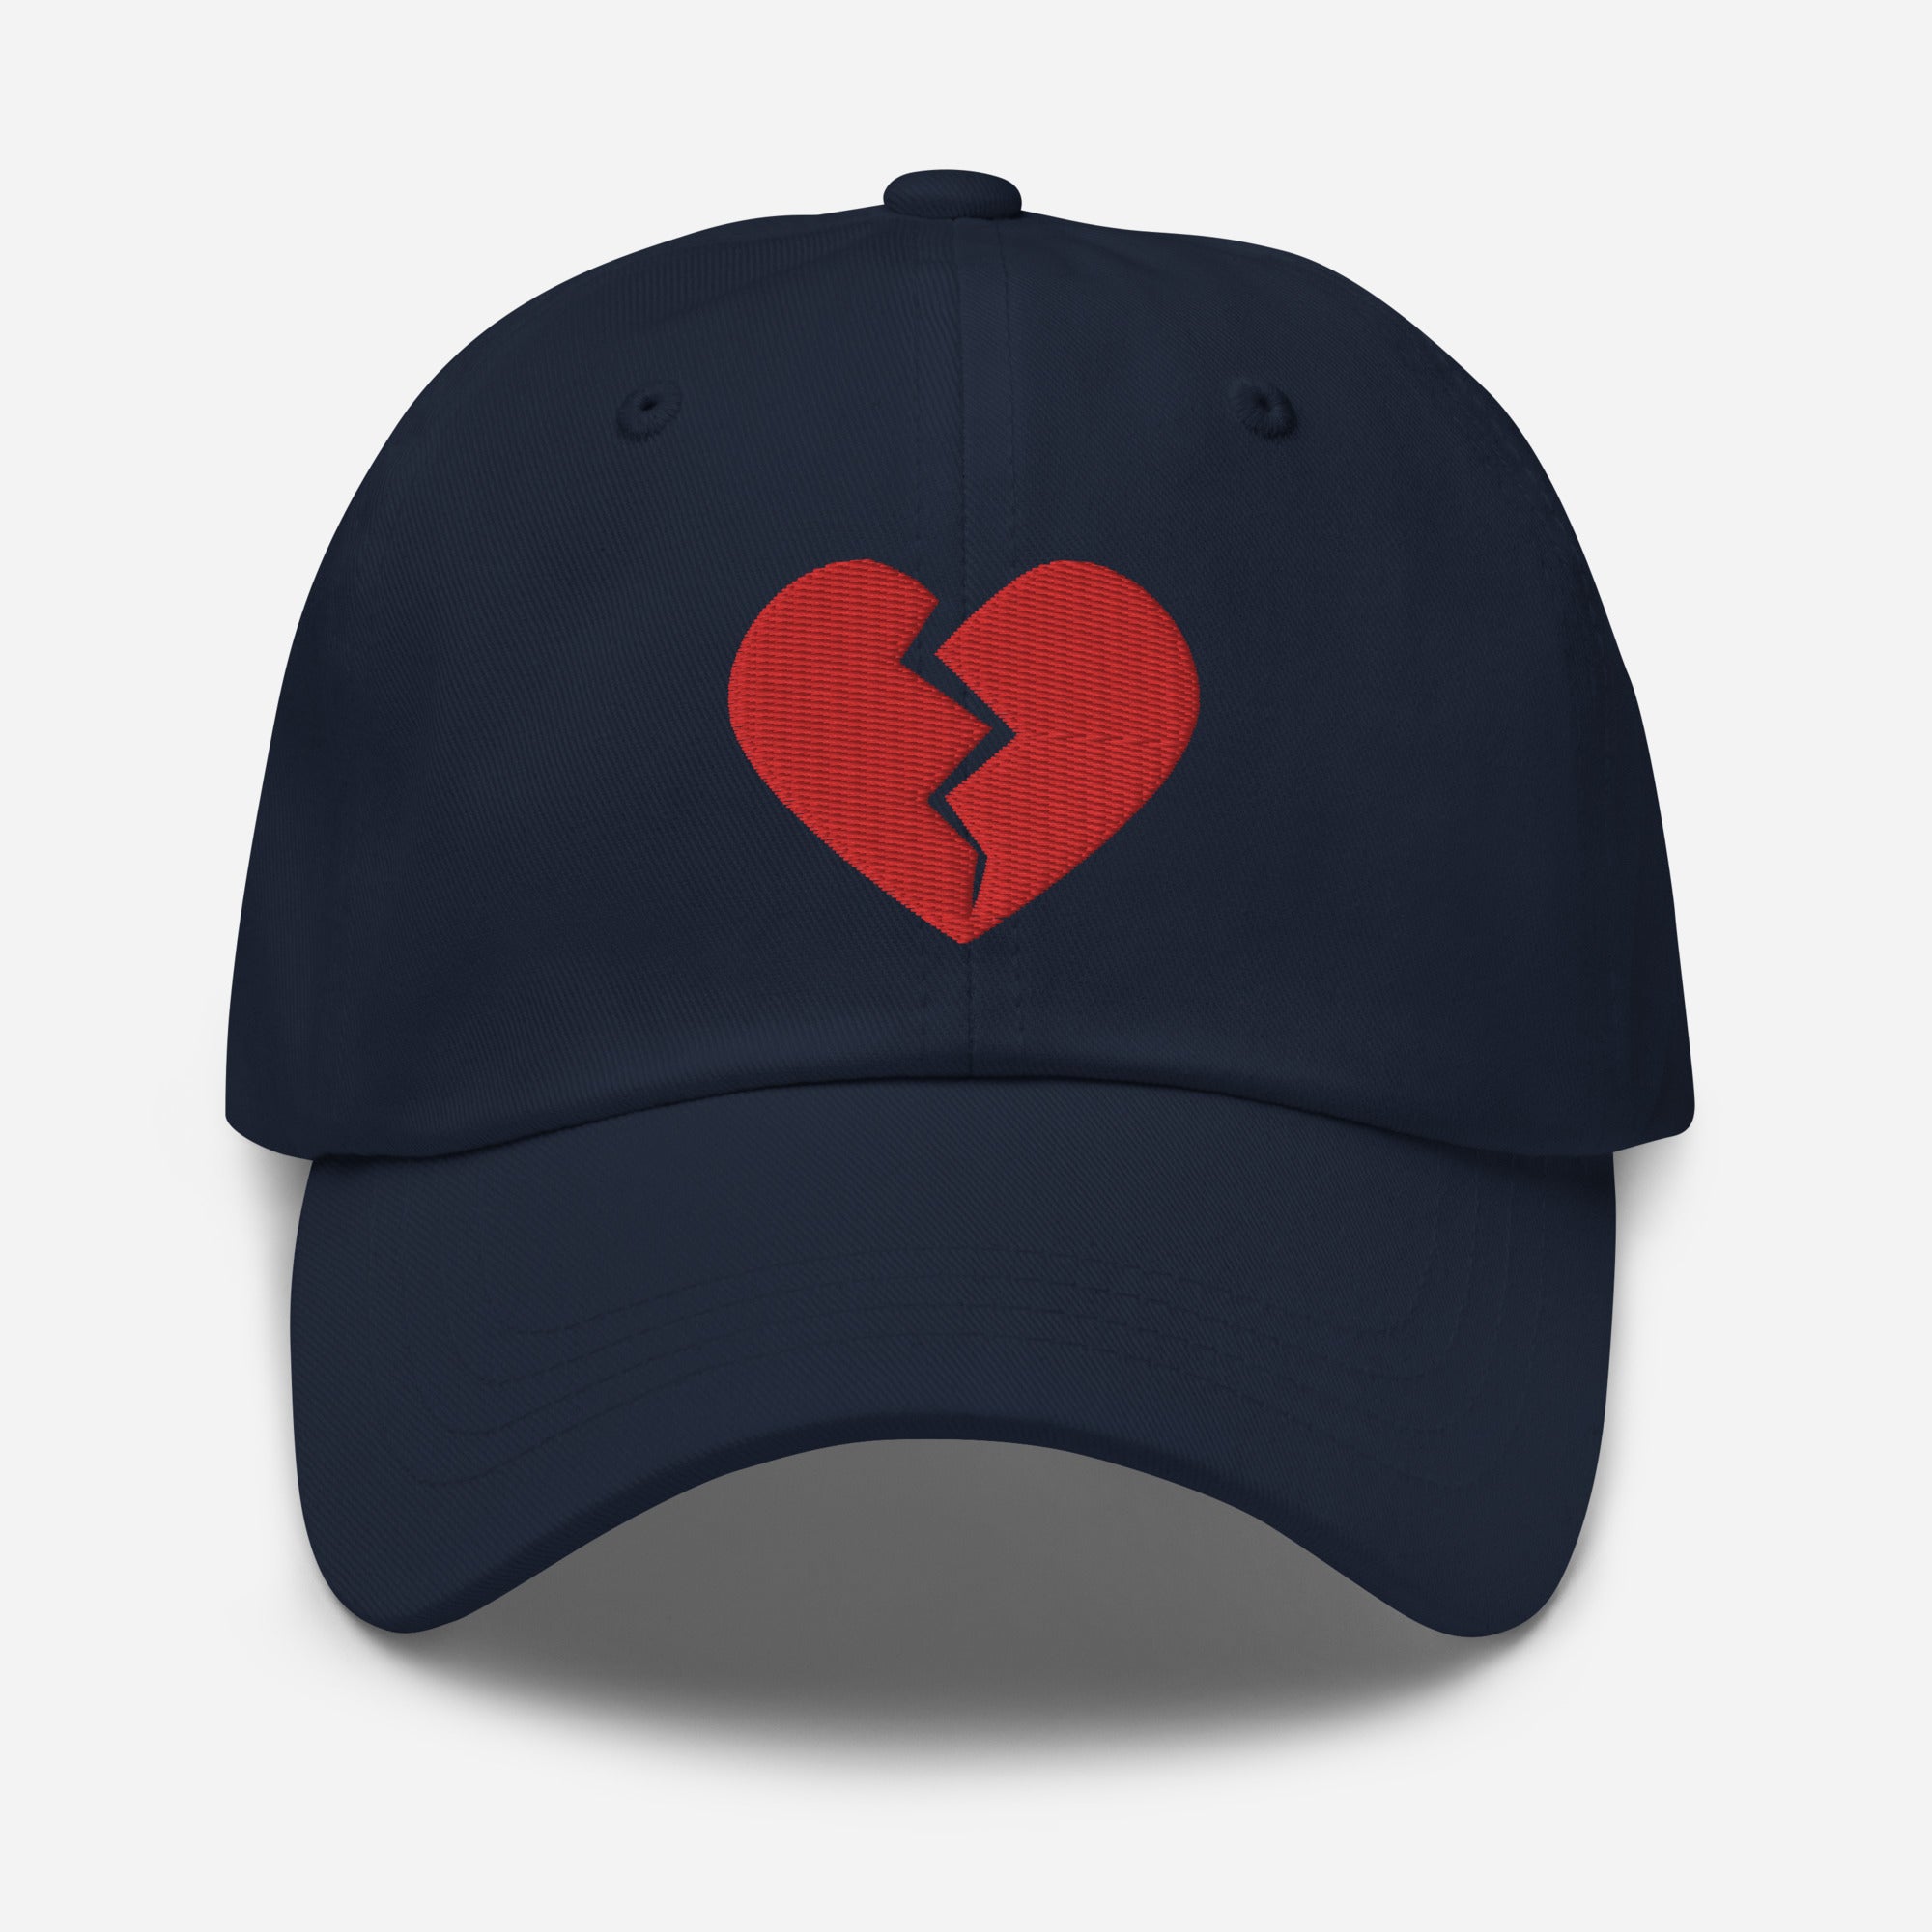 Red Broken Heart Valentine's Day Embroidered Baseball Cap Dad hat